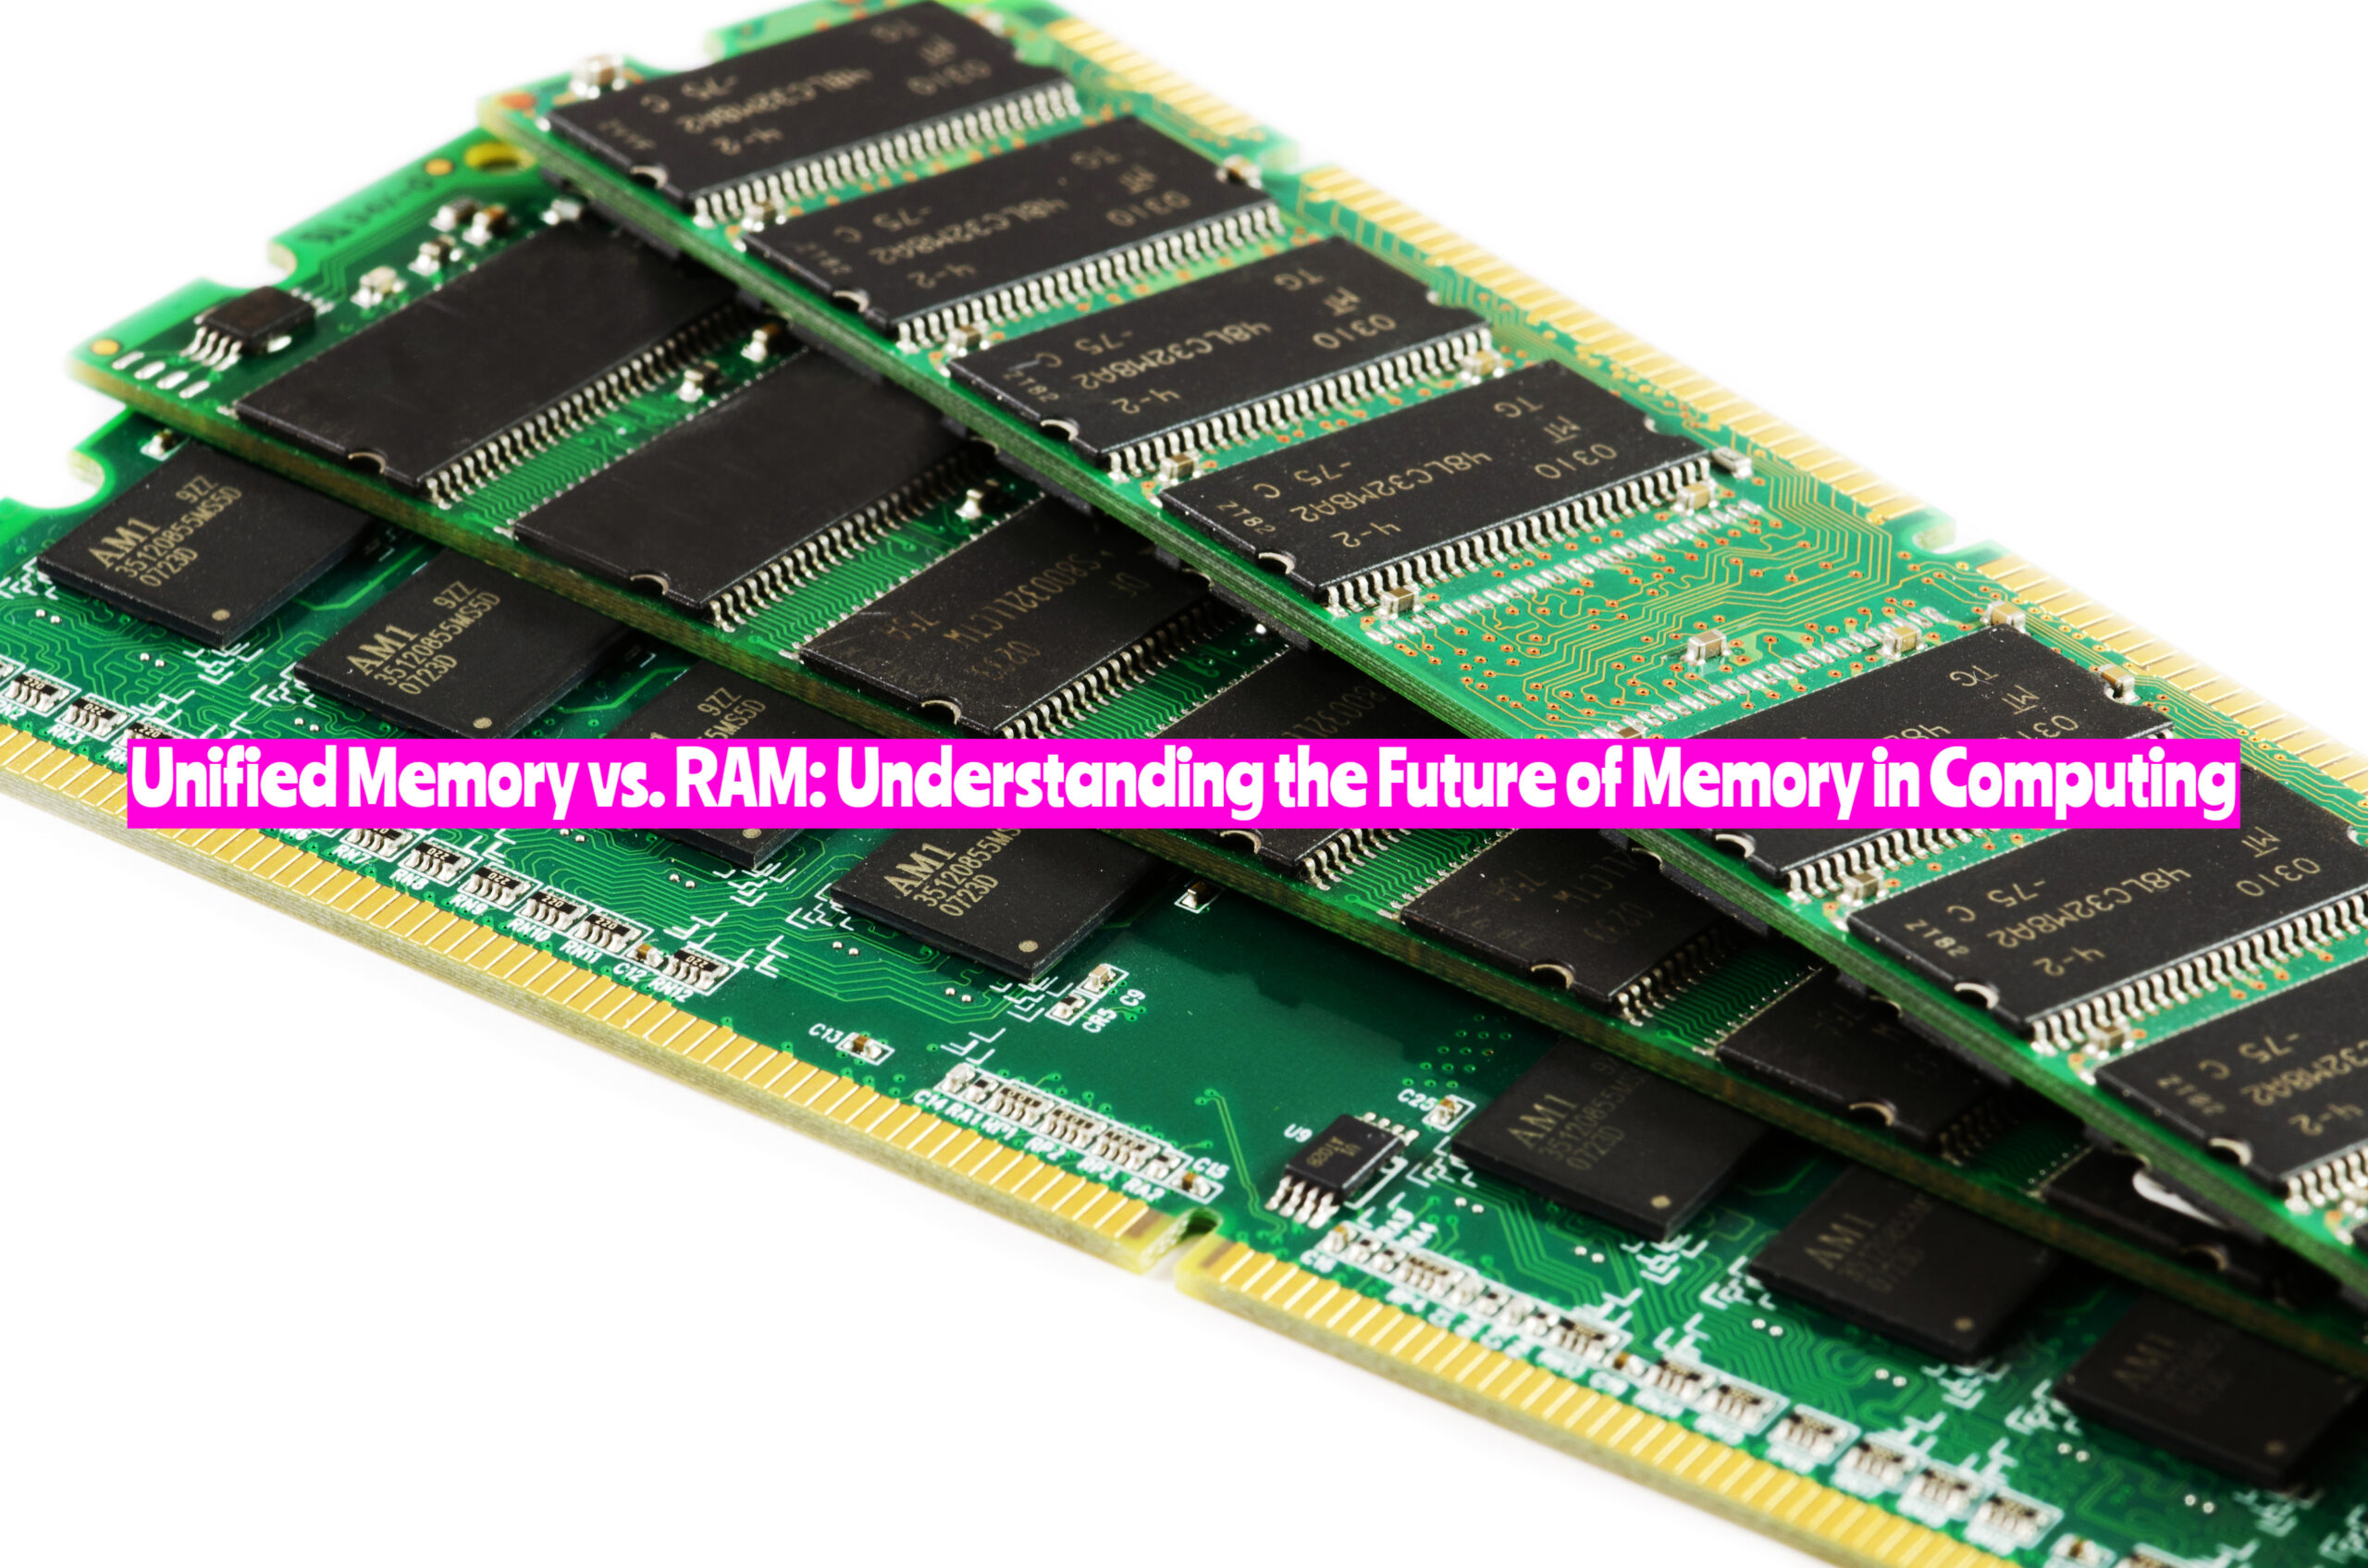 Unified Memory vs. RAM: Understanding the Future of Memory in Computing